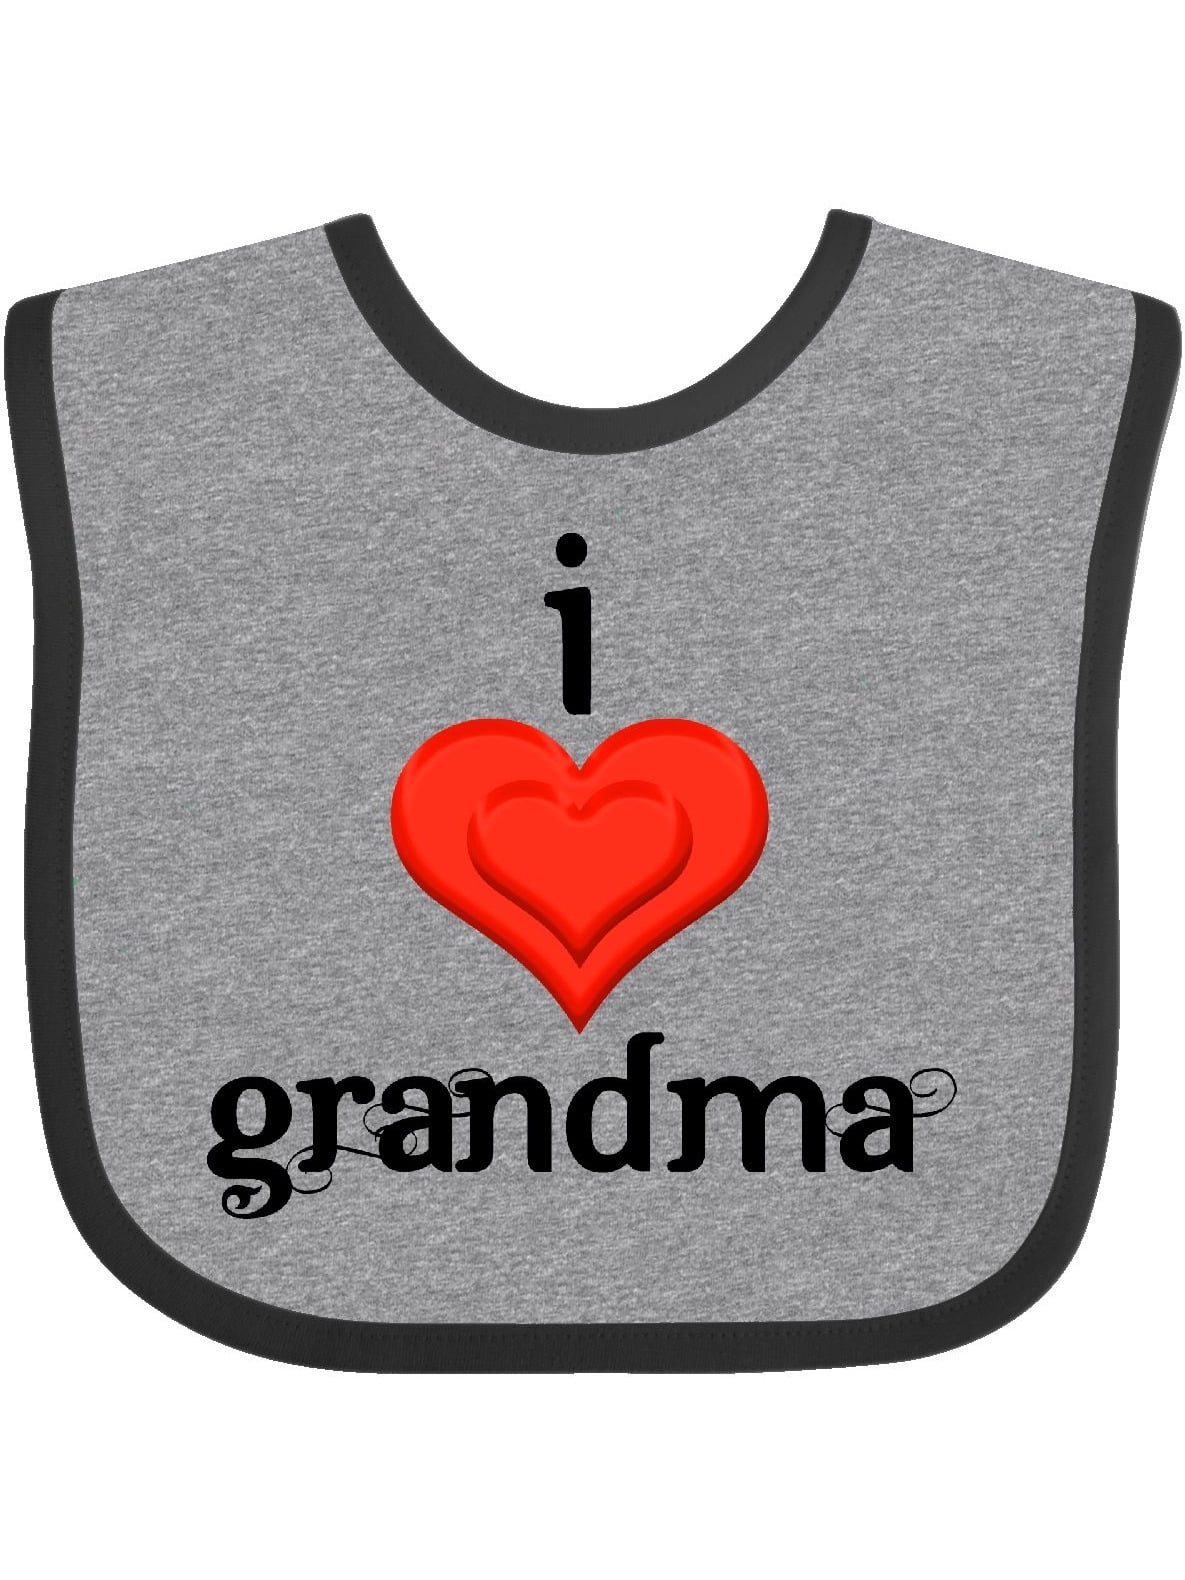 I love Grandma Baby Bib - Walmart.com 